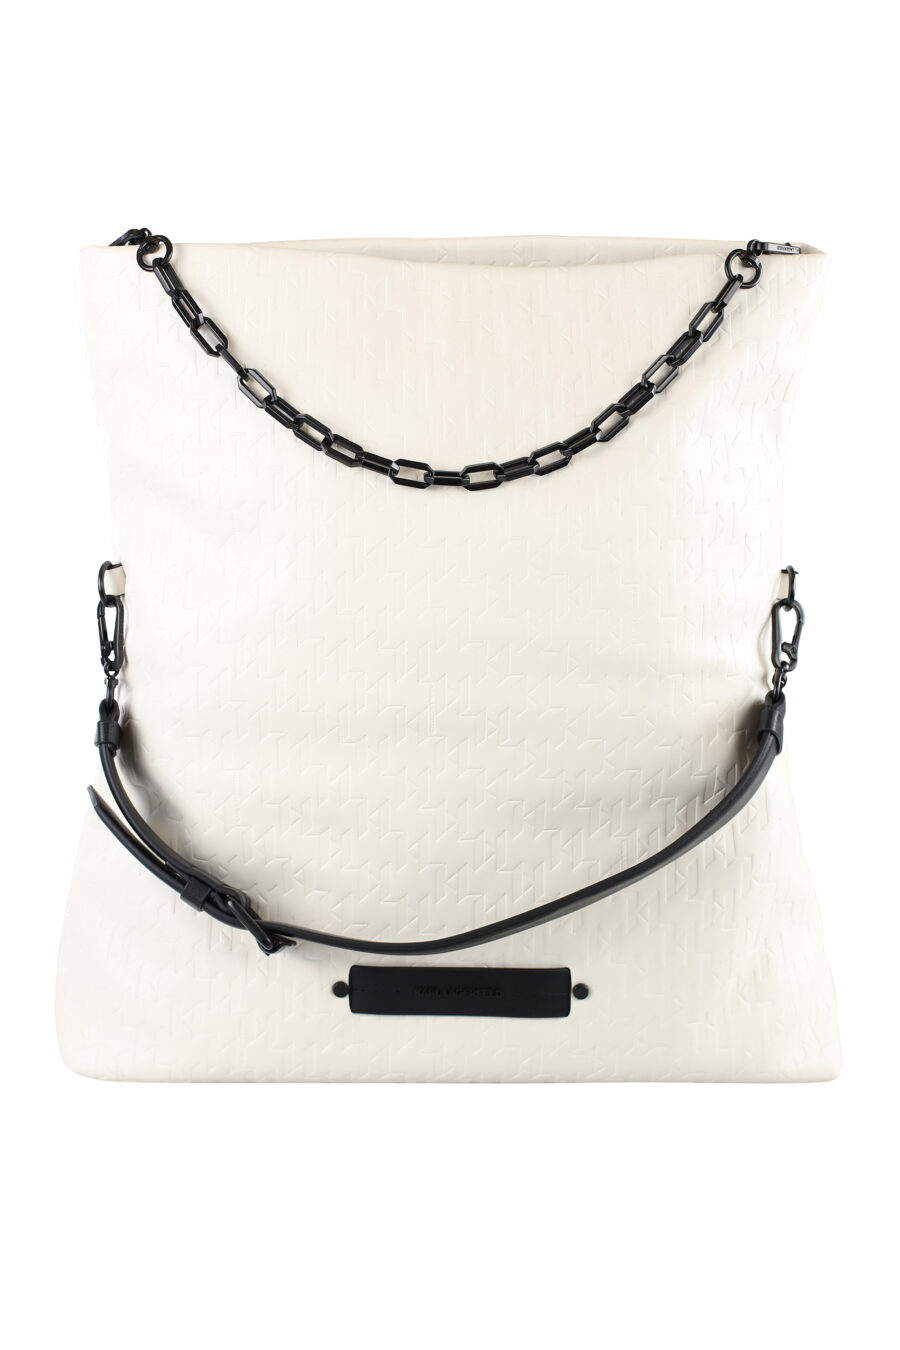 Tote bag white with black logo - IMG 7027